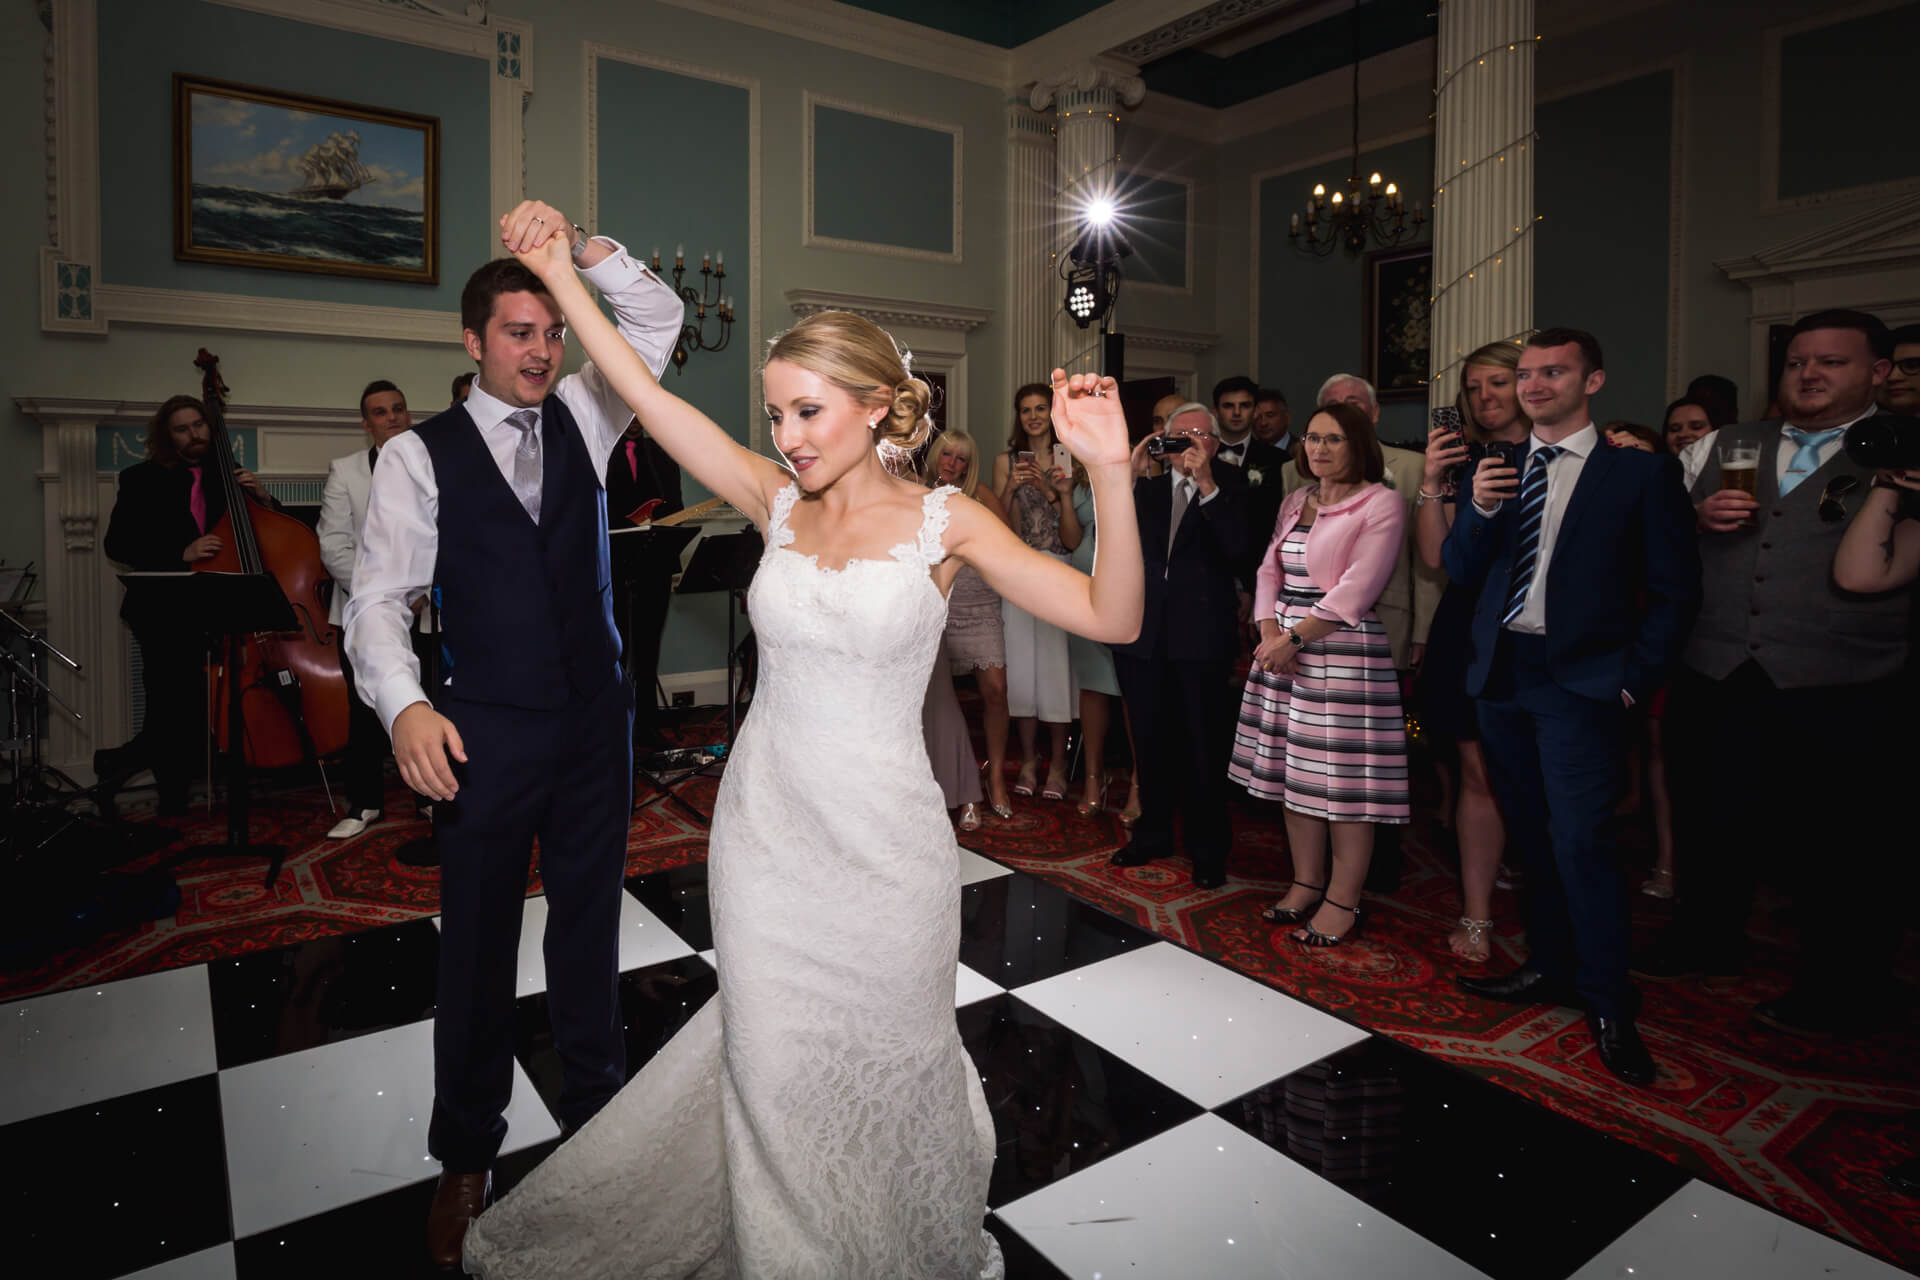 Denton Hall Wedding Photograpy - Couple's first dance